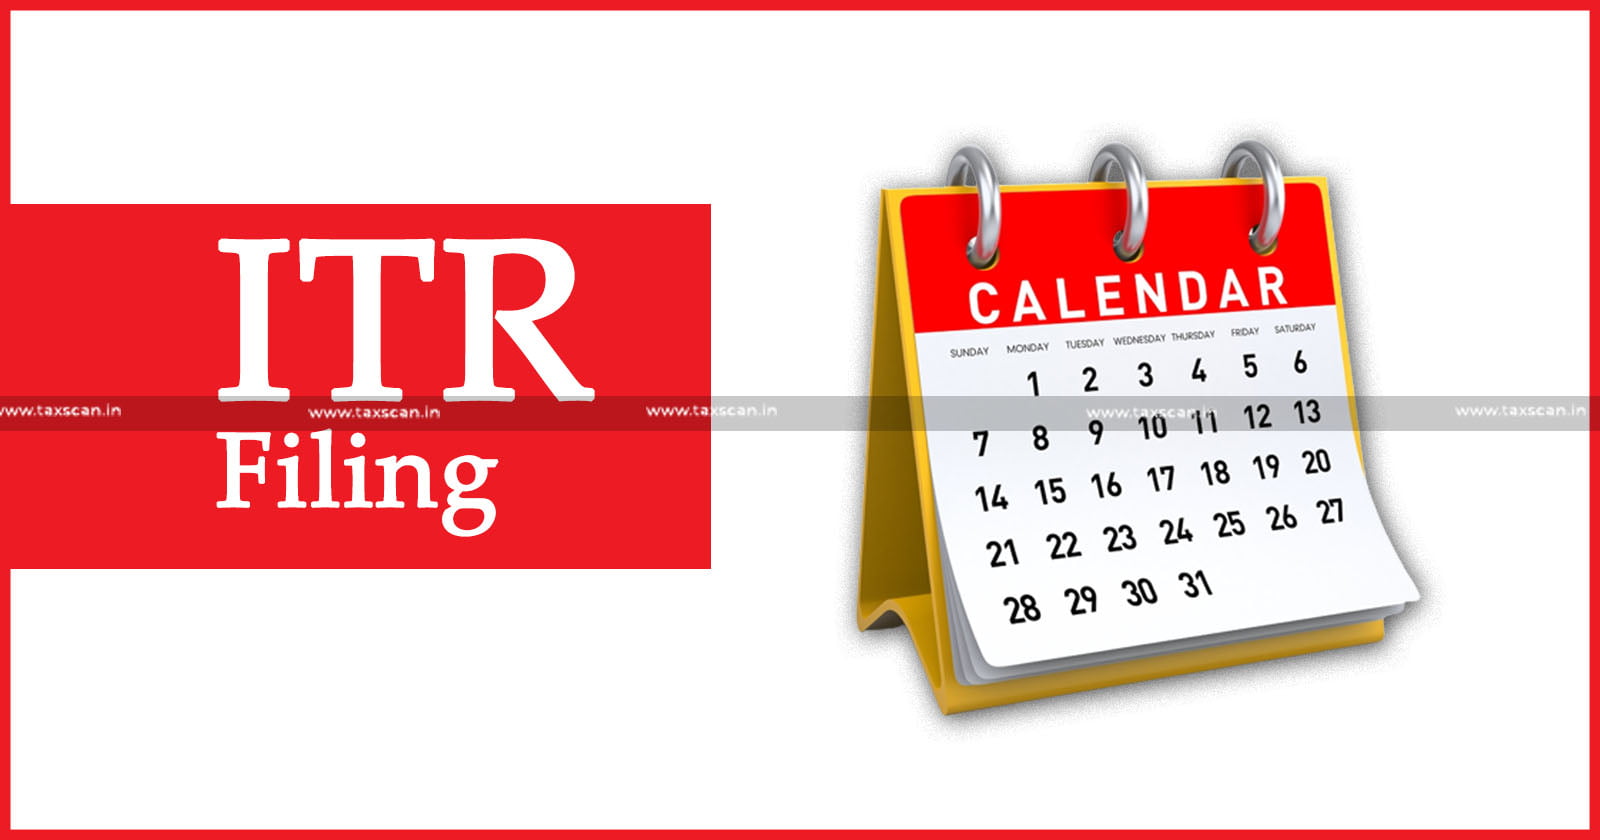 ITAT Ahmedabad - ITAT - Income Tax - Income Tax Act - ITR Filing - Income Tax Returns Filing - Taxscan